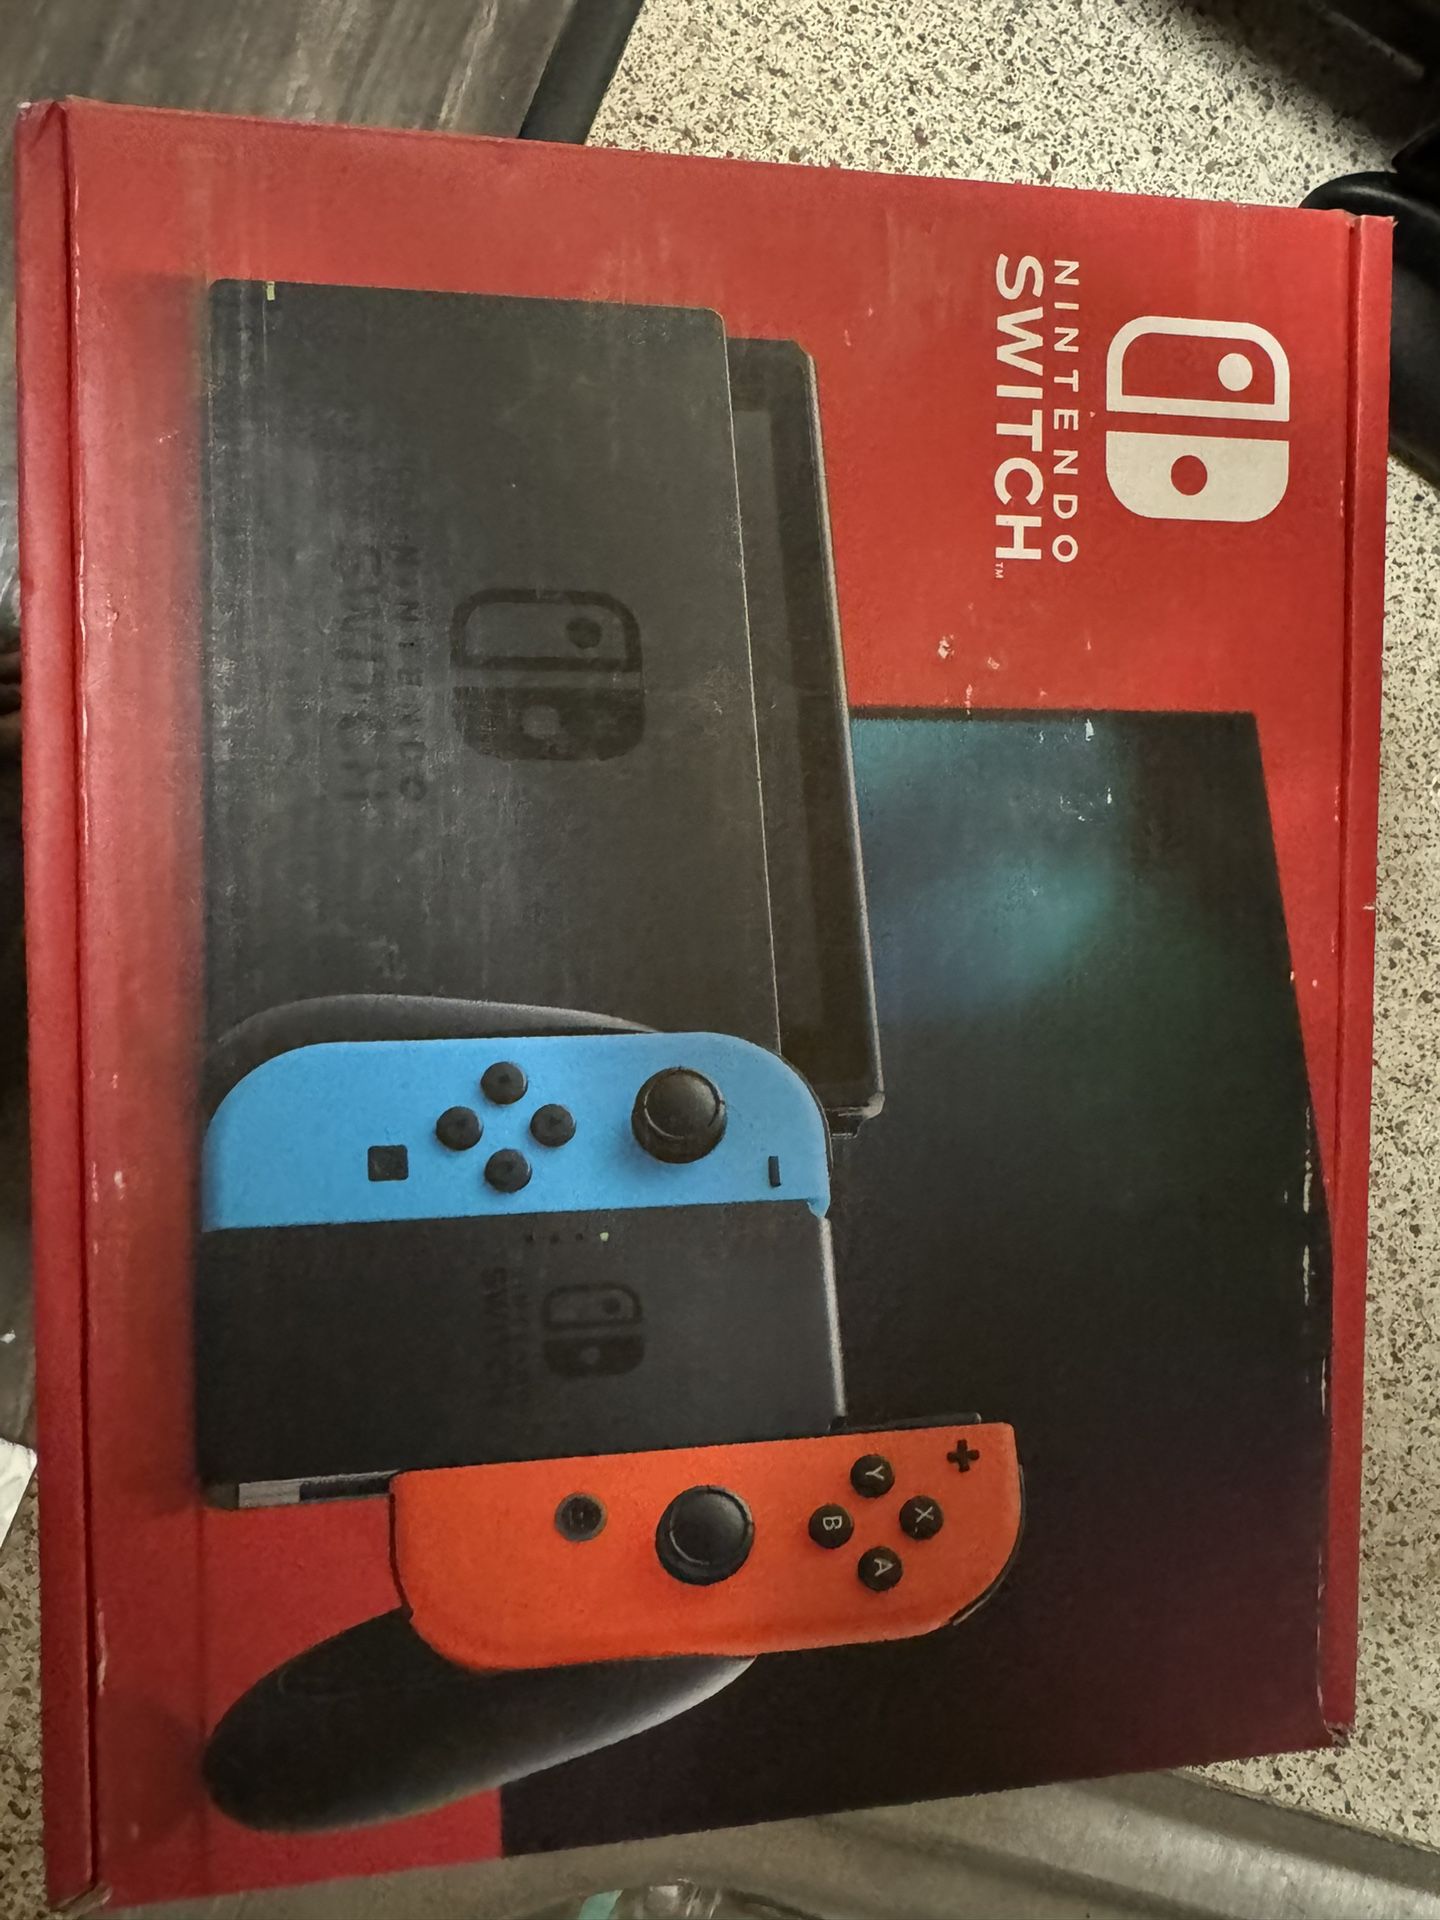 Brand New Nintendo Switch Neon 